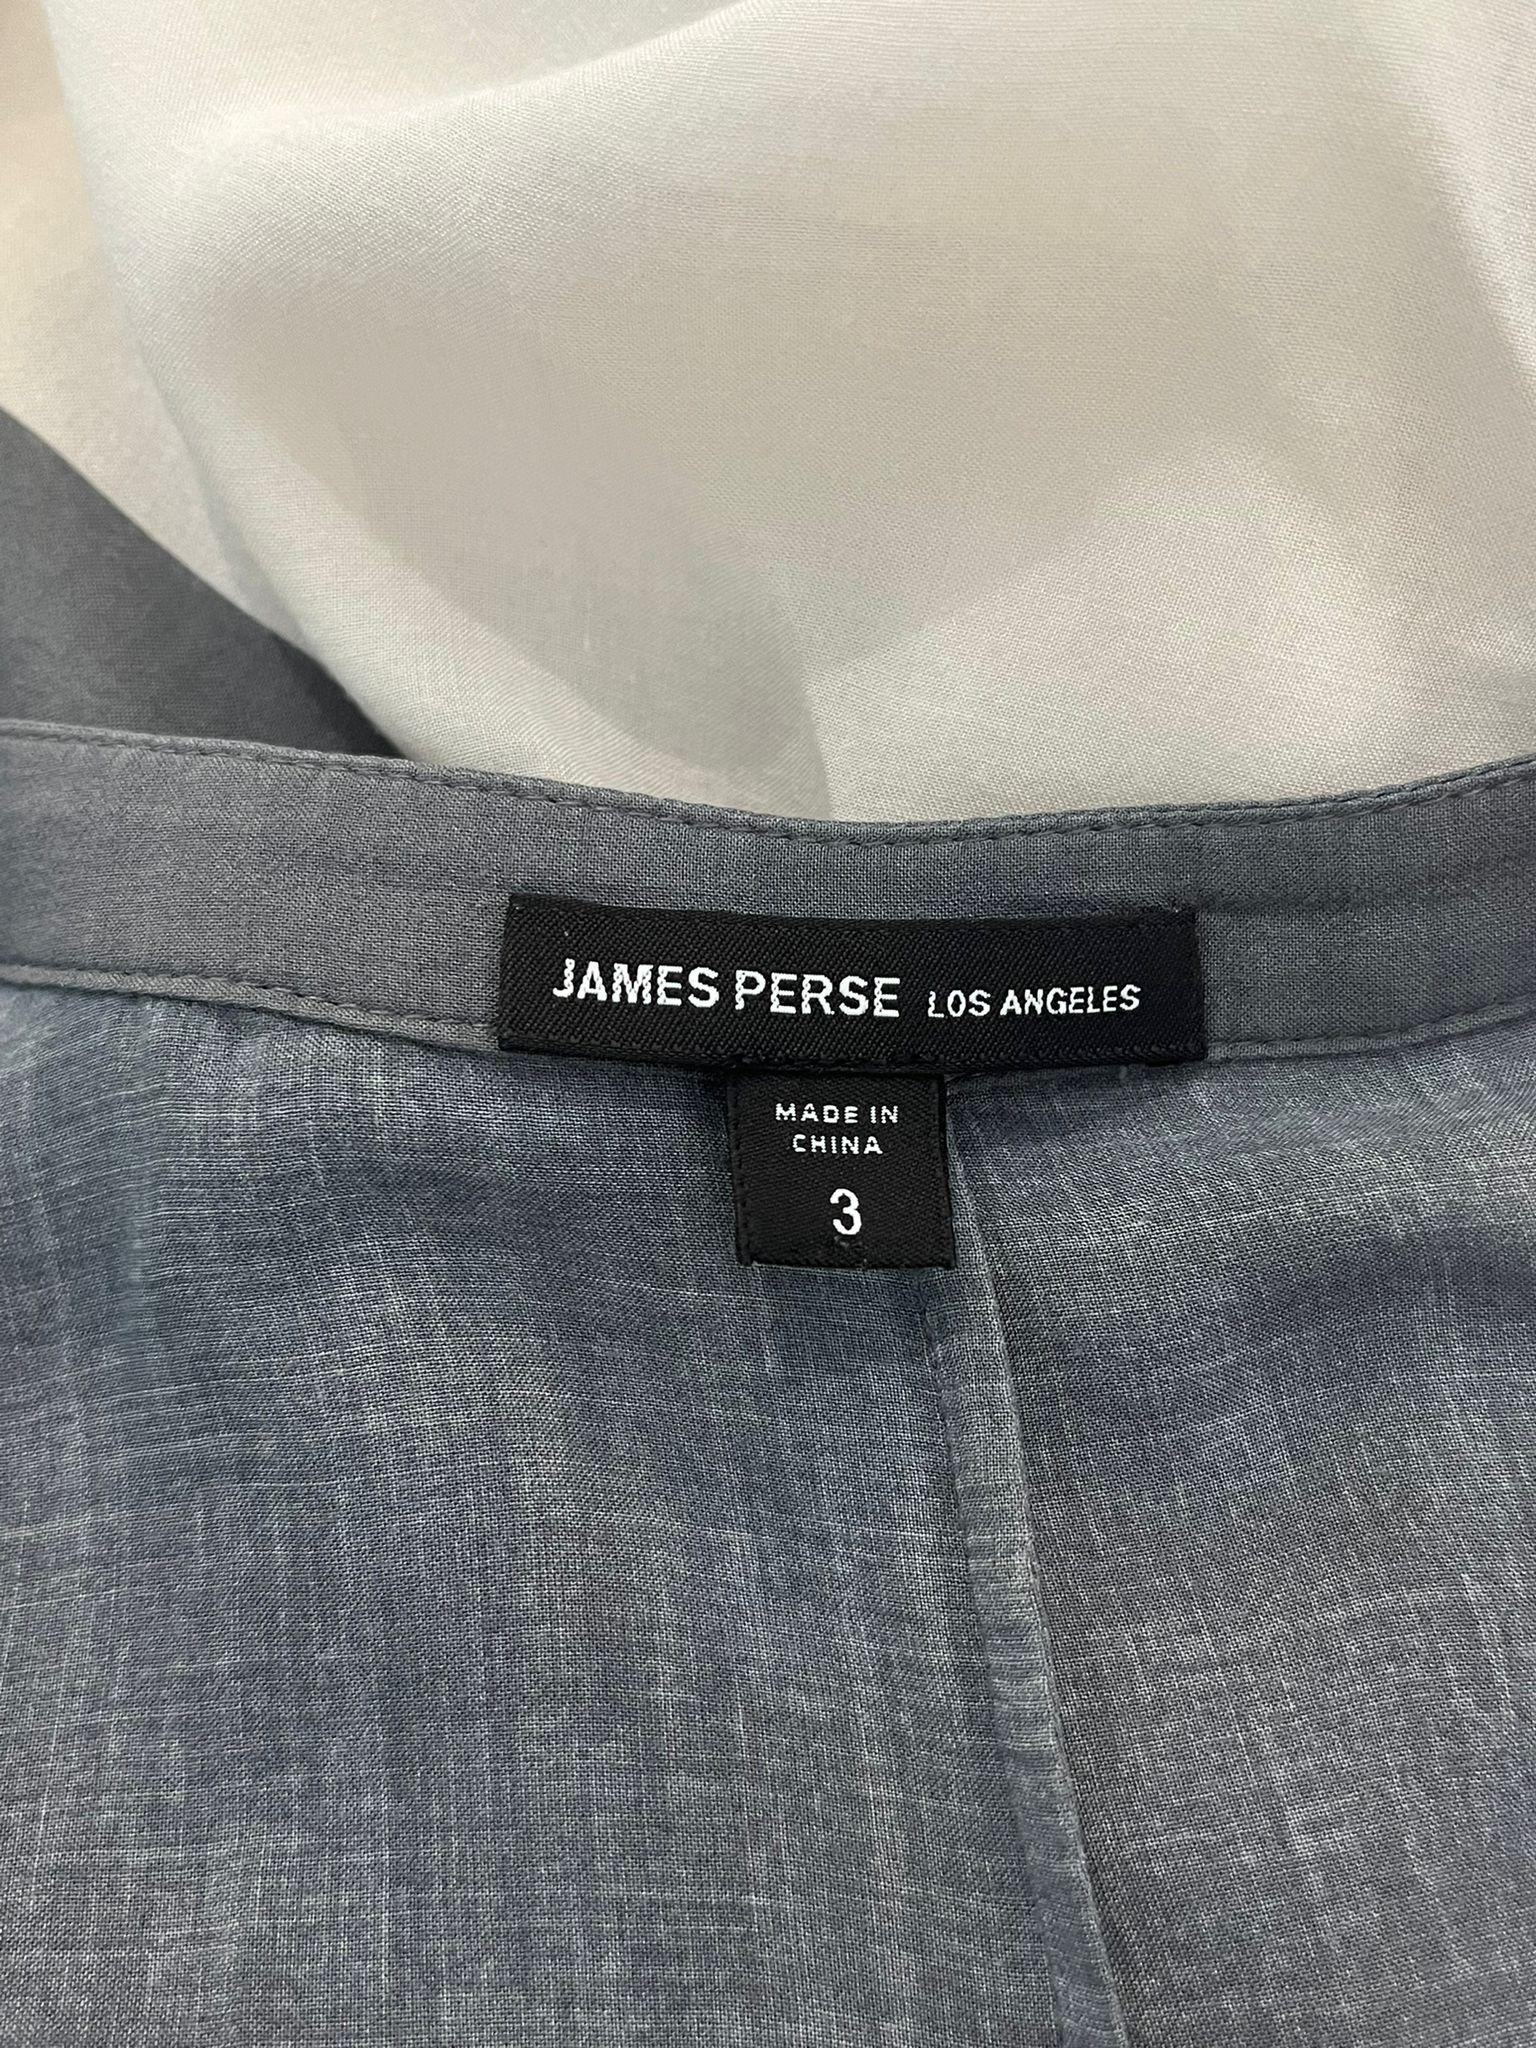 James Perse Shirt Midi Dress For Sale 1